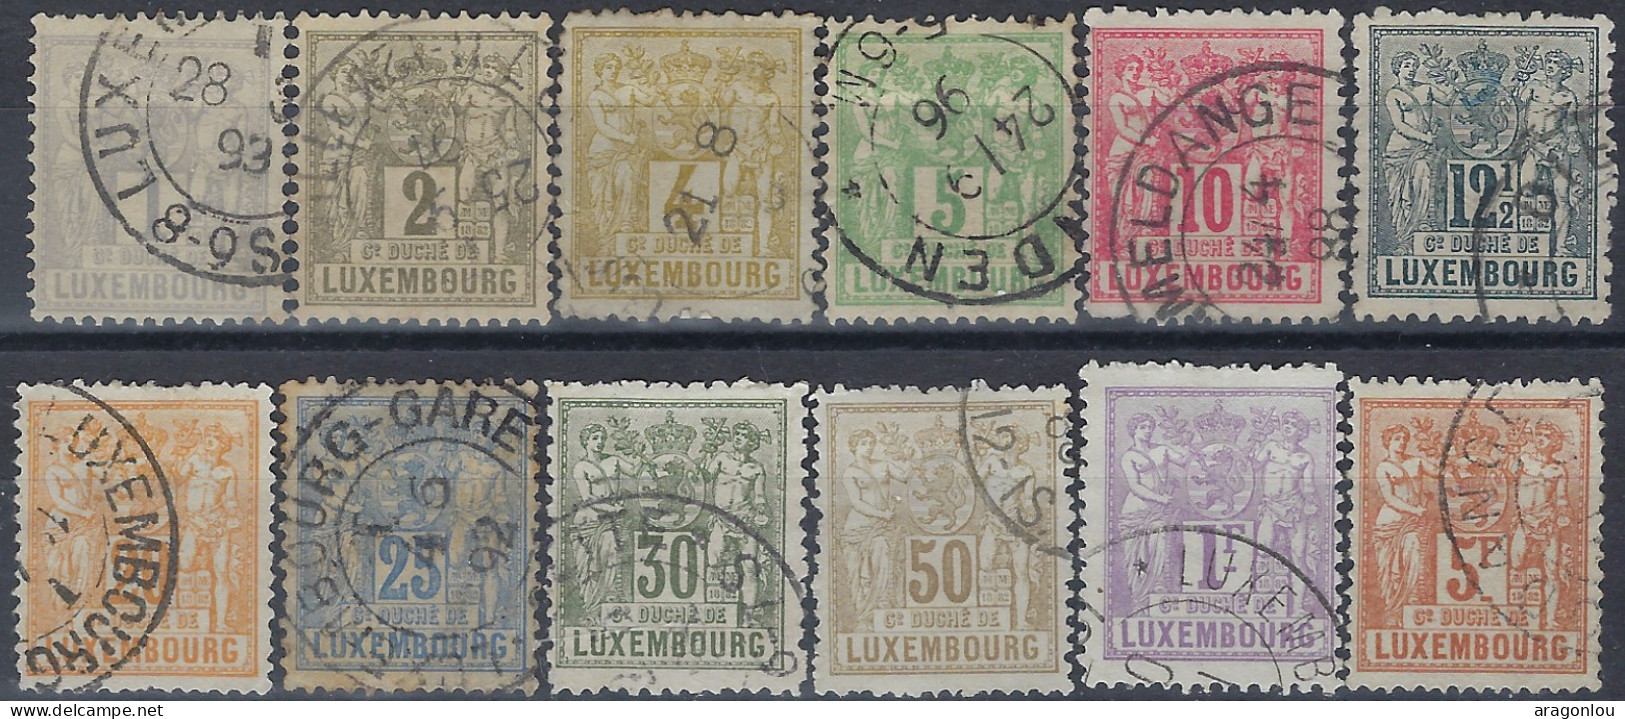 Luxembourg - Luxemburg - Timbre - 1882  ALLégorie   Série   ° - 1882 Allégorie